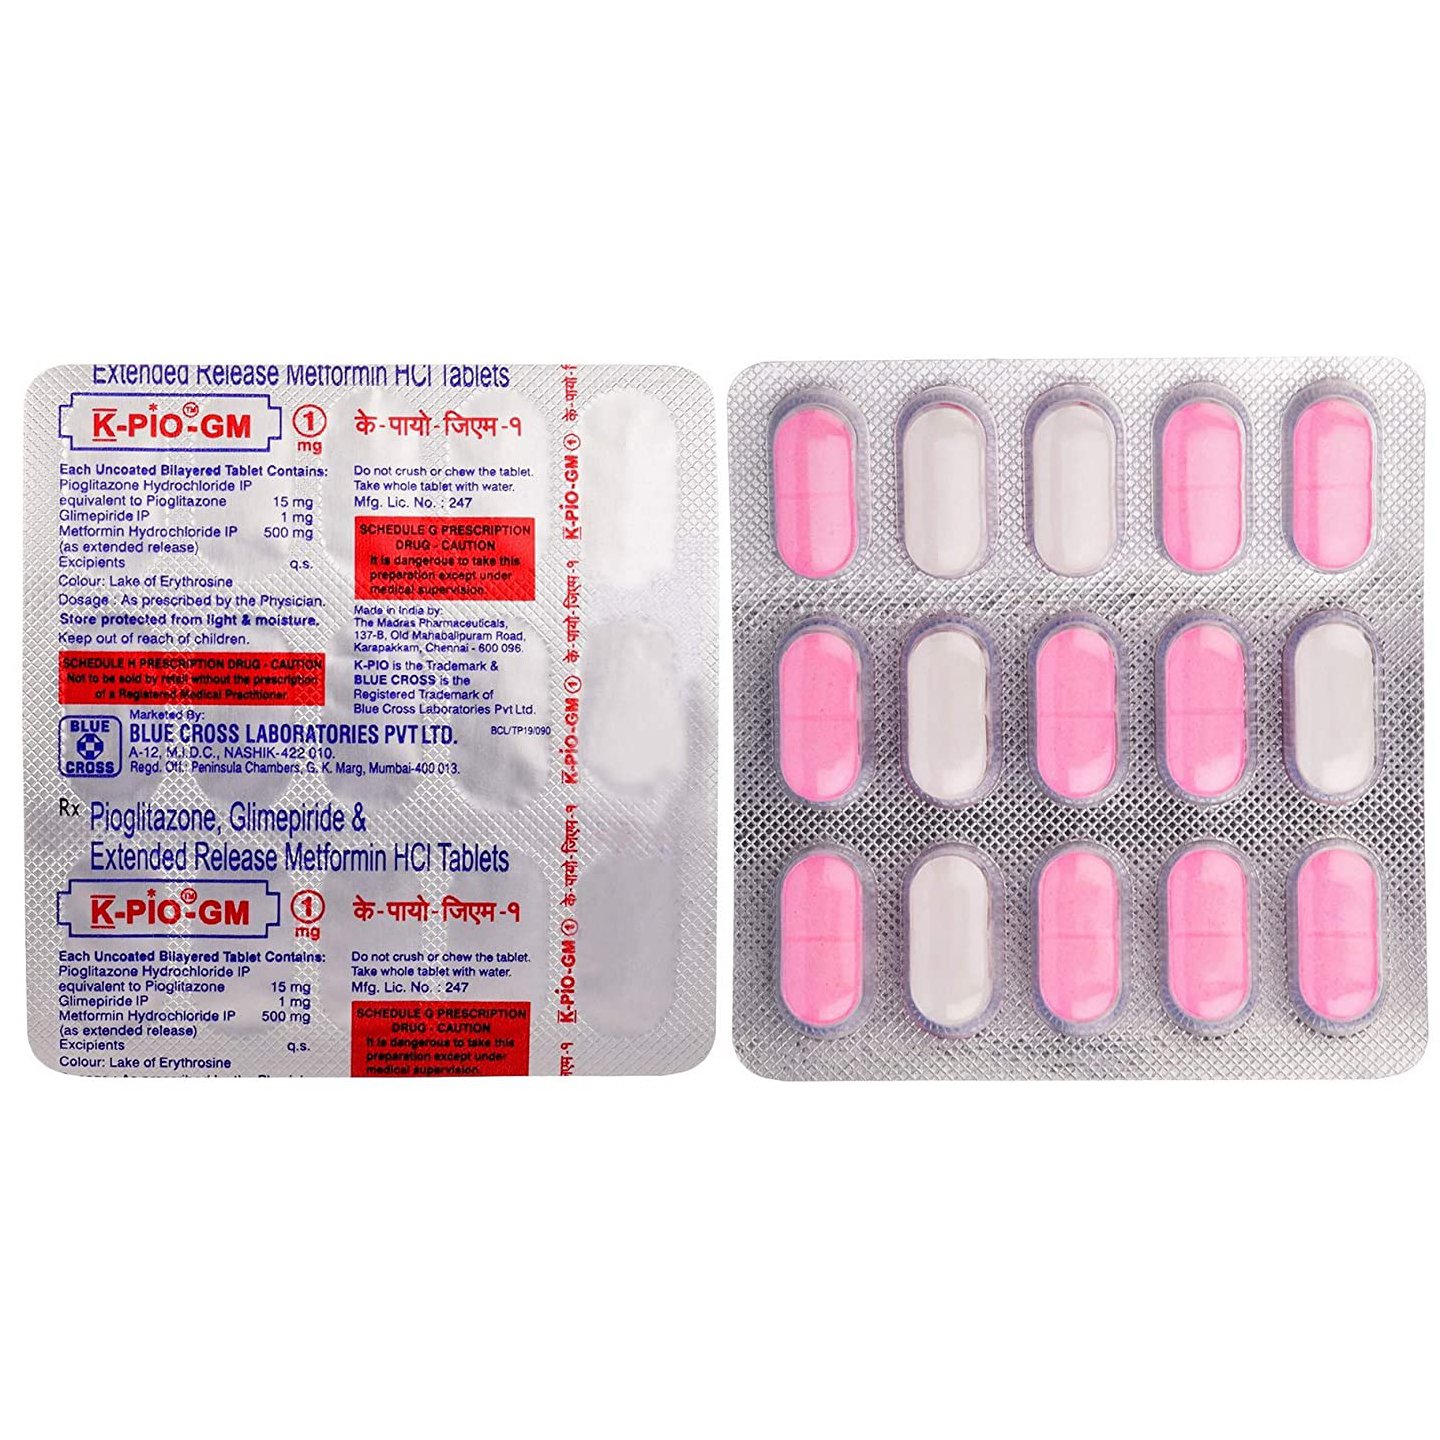 K-Pio-Gm 1mg Tablet  - Prescription Required